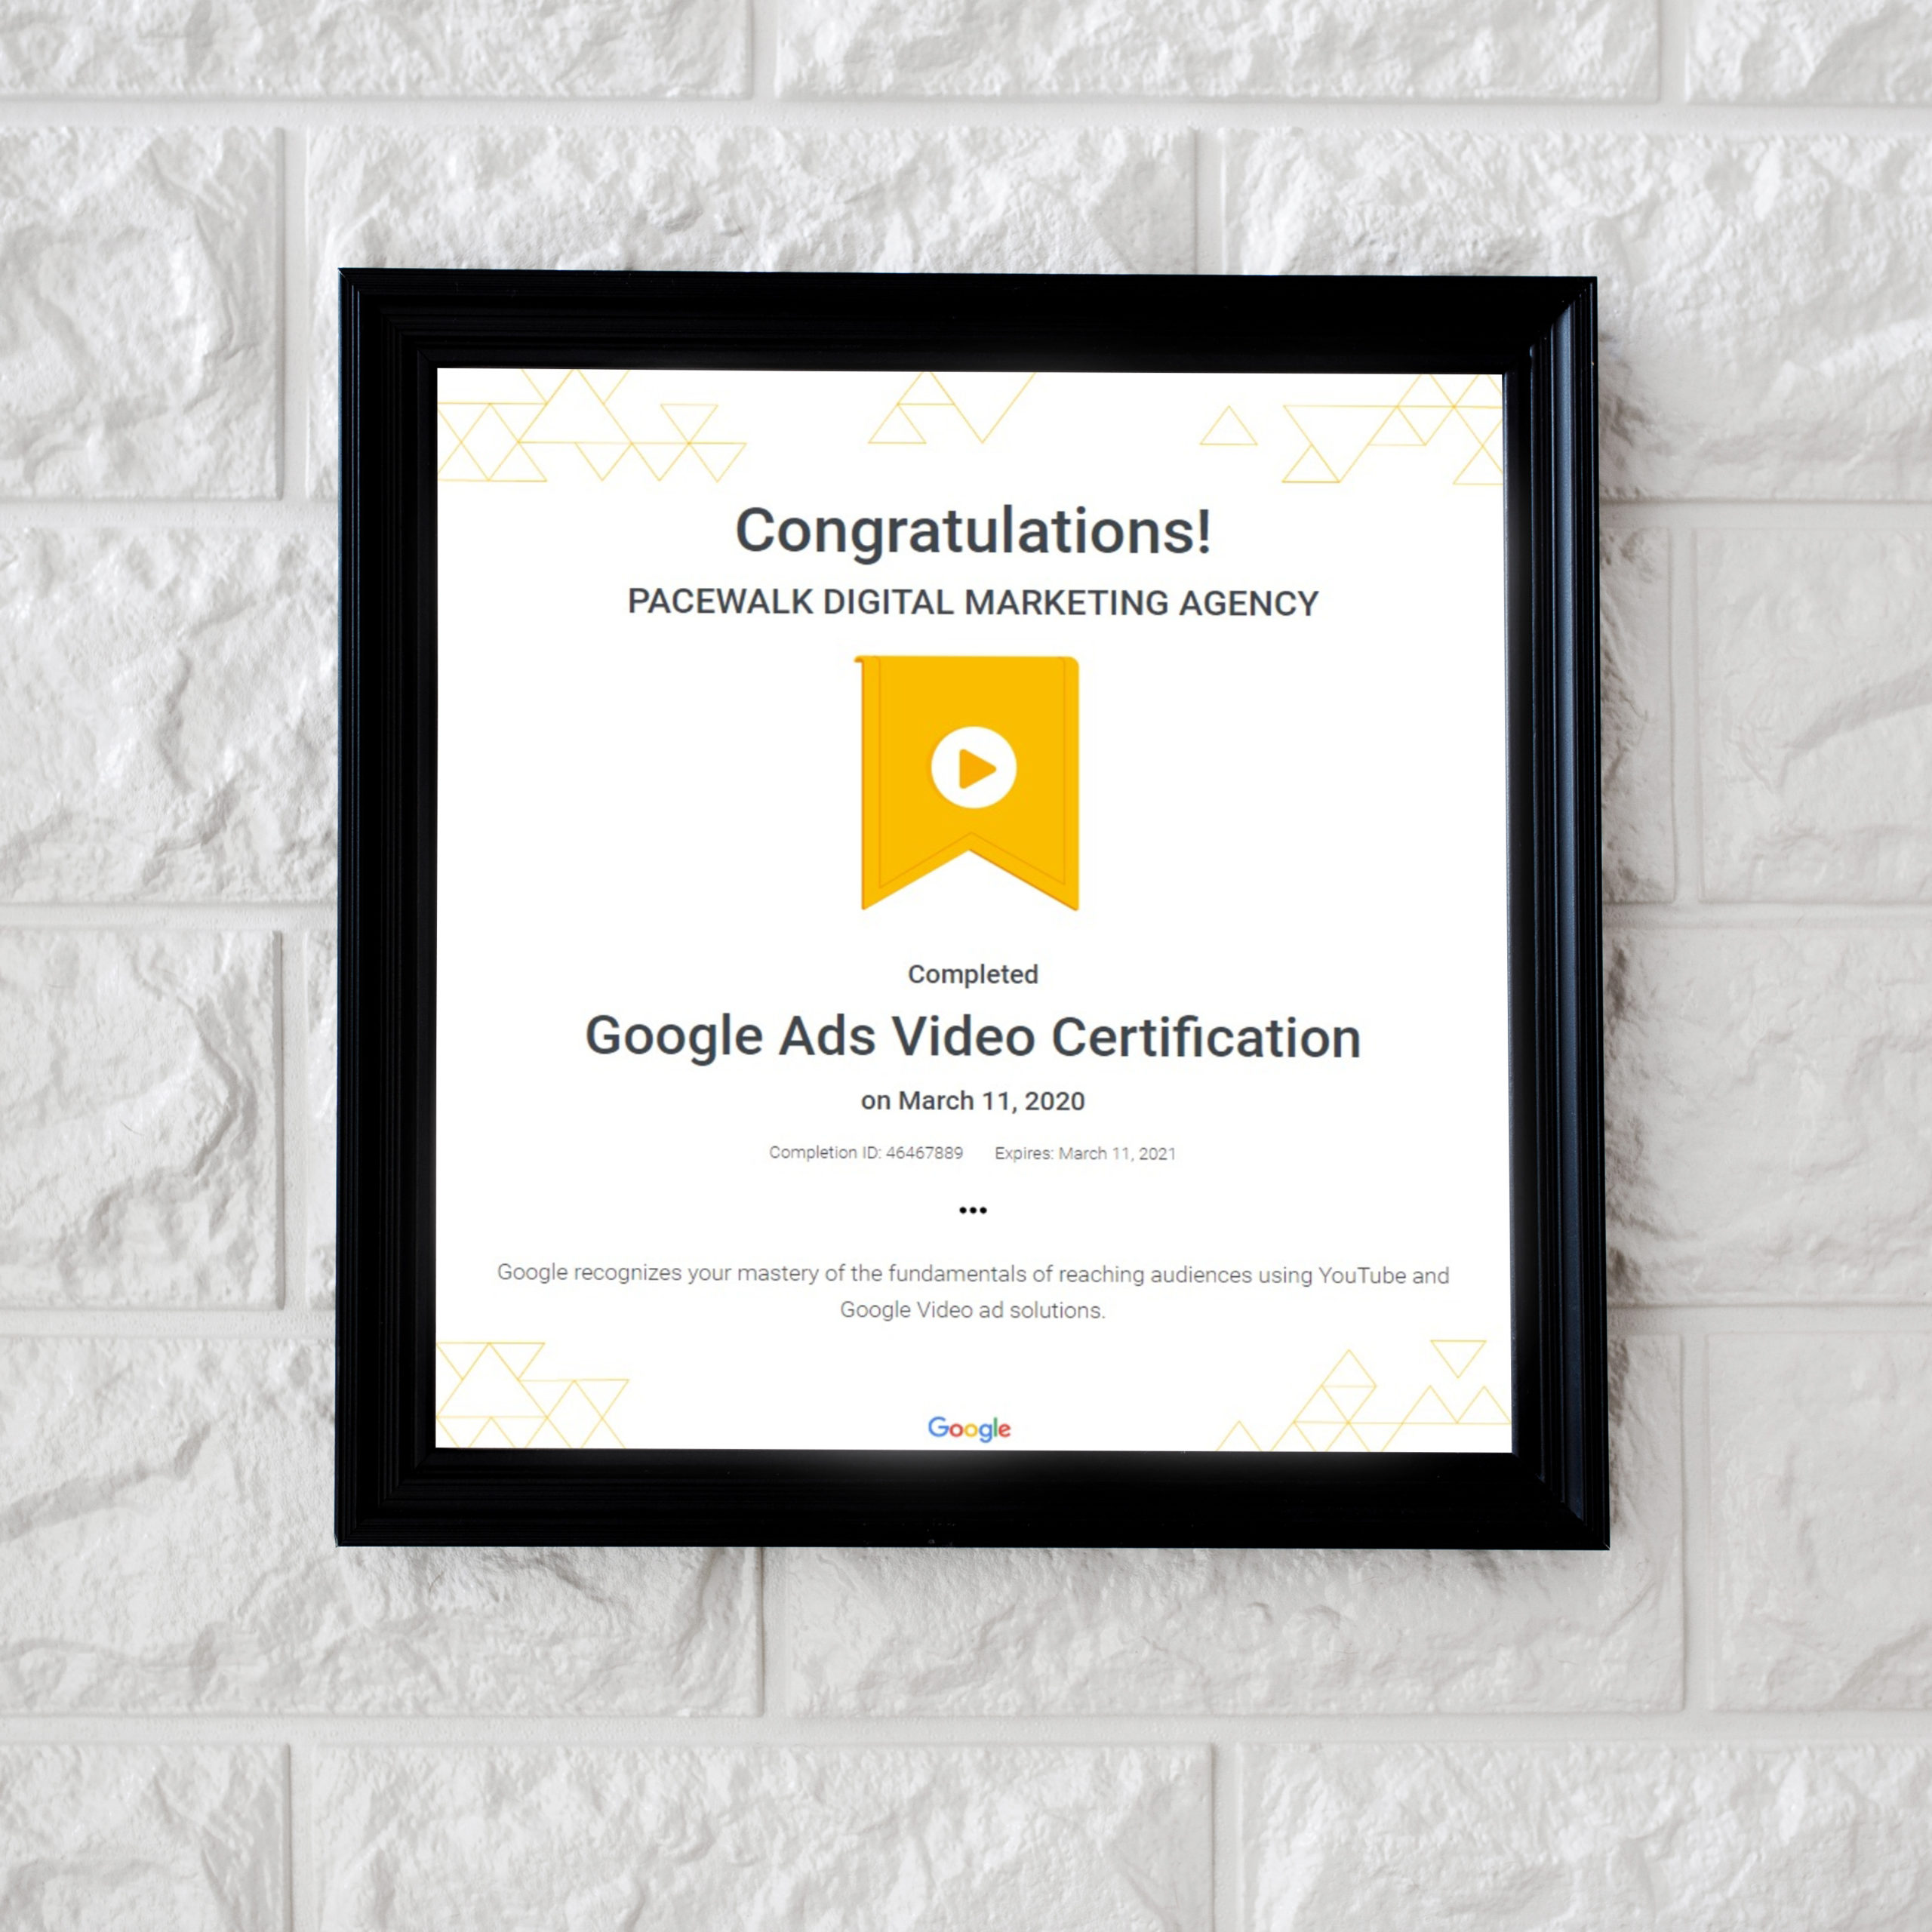 Google Ads Certified Company in Chandigarh